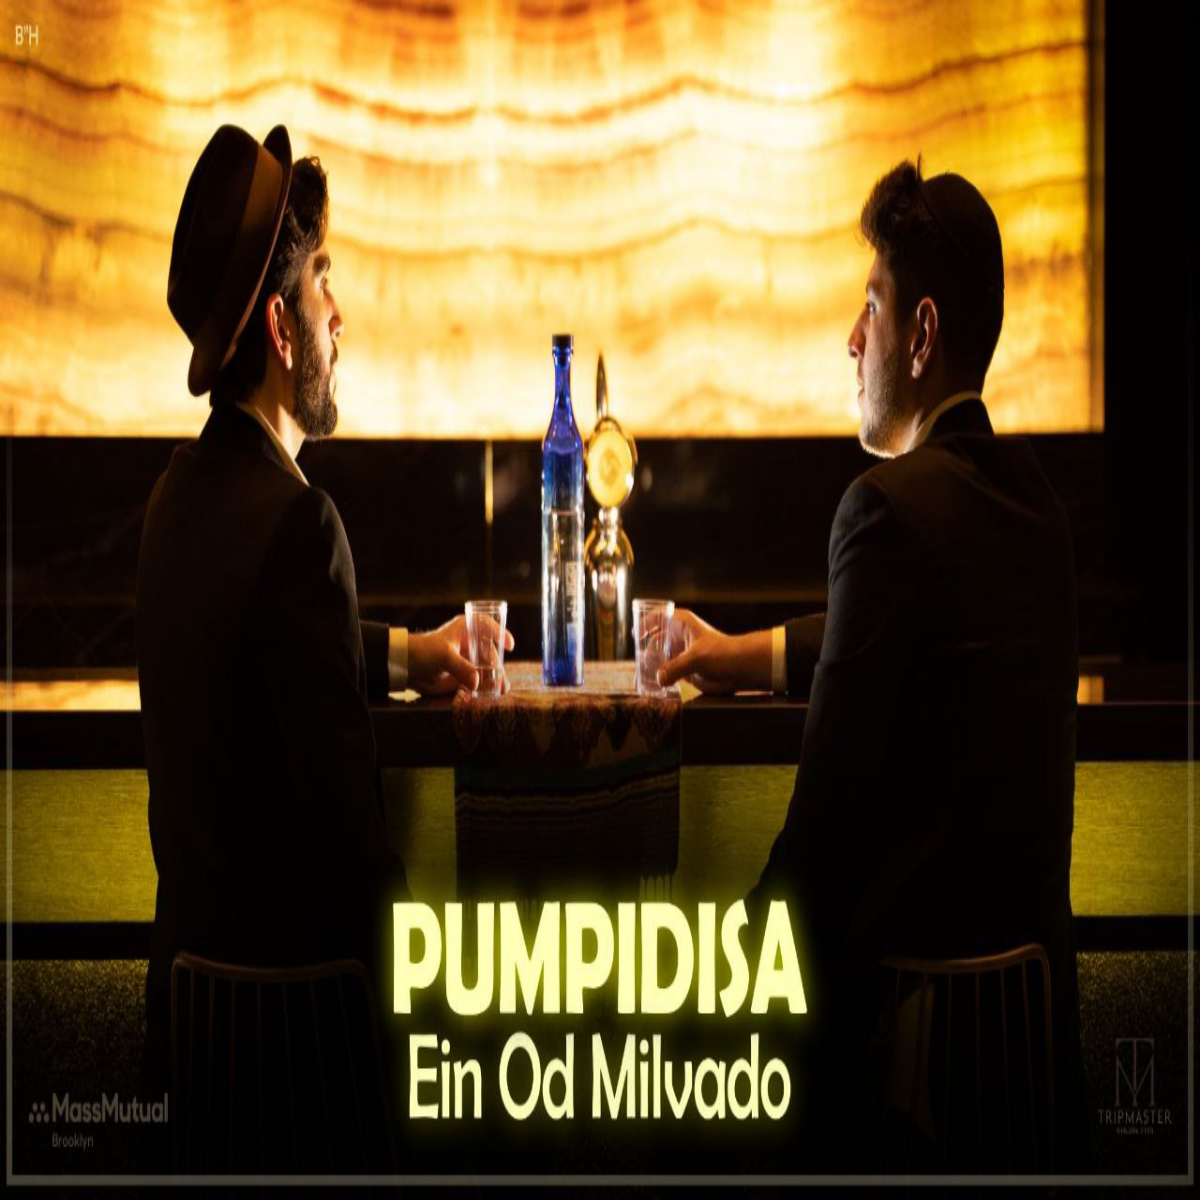 Pumpidisa - עין עוד מילבאדו (רווק)